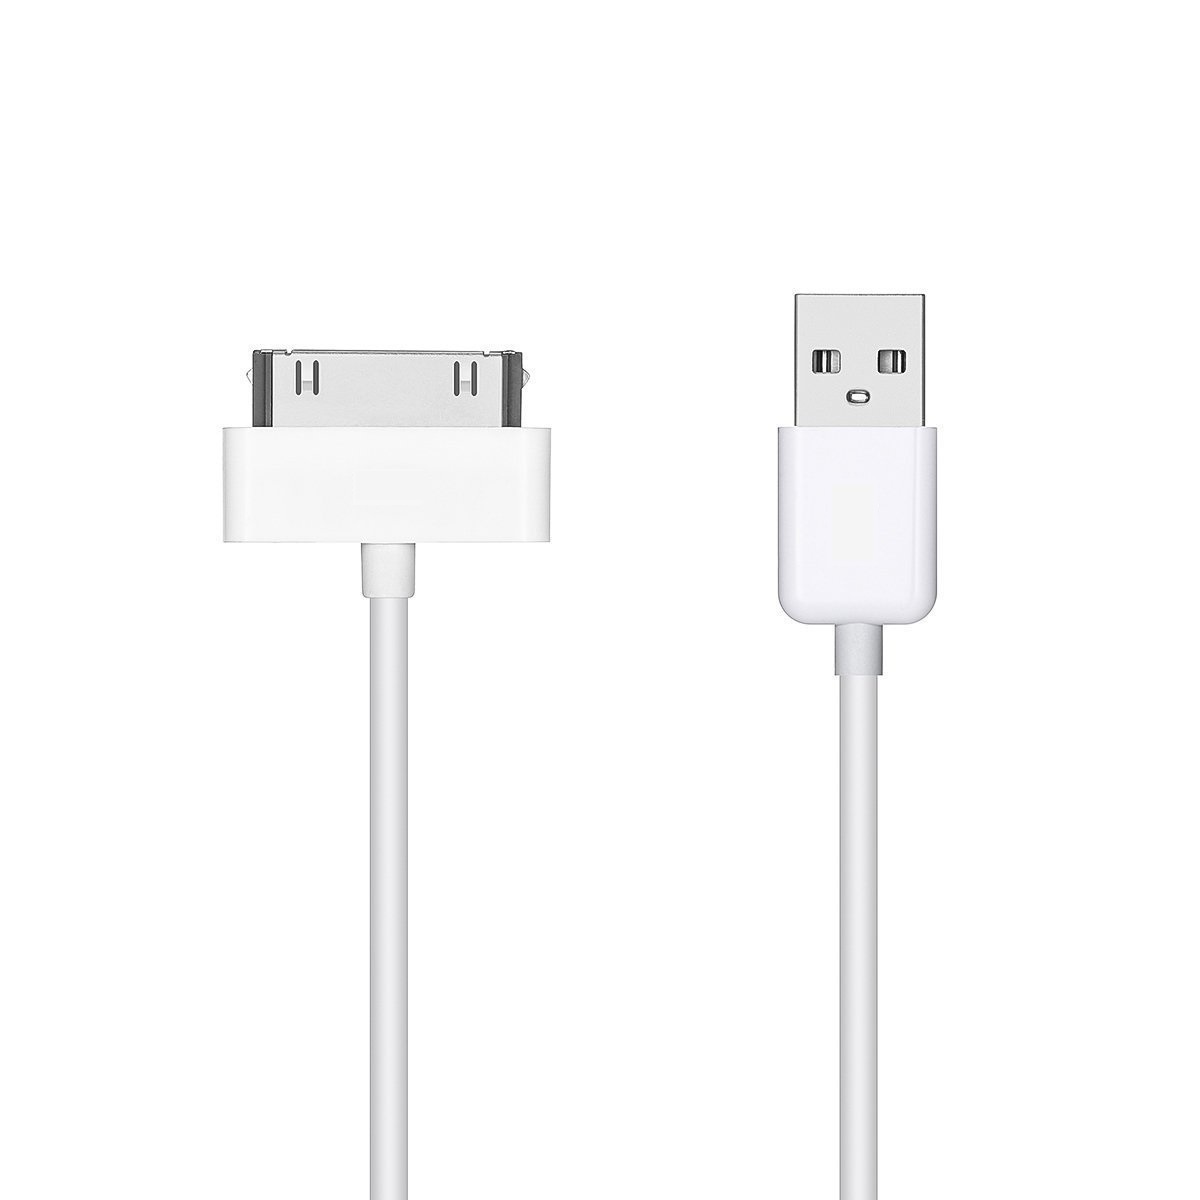 DOCKケーブル iPad iPhone4 4S 3GS 3G iPod 等対応 USB cable 充電 データ転送USBケーブル 2m 全2色 ホワイト_画像1